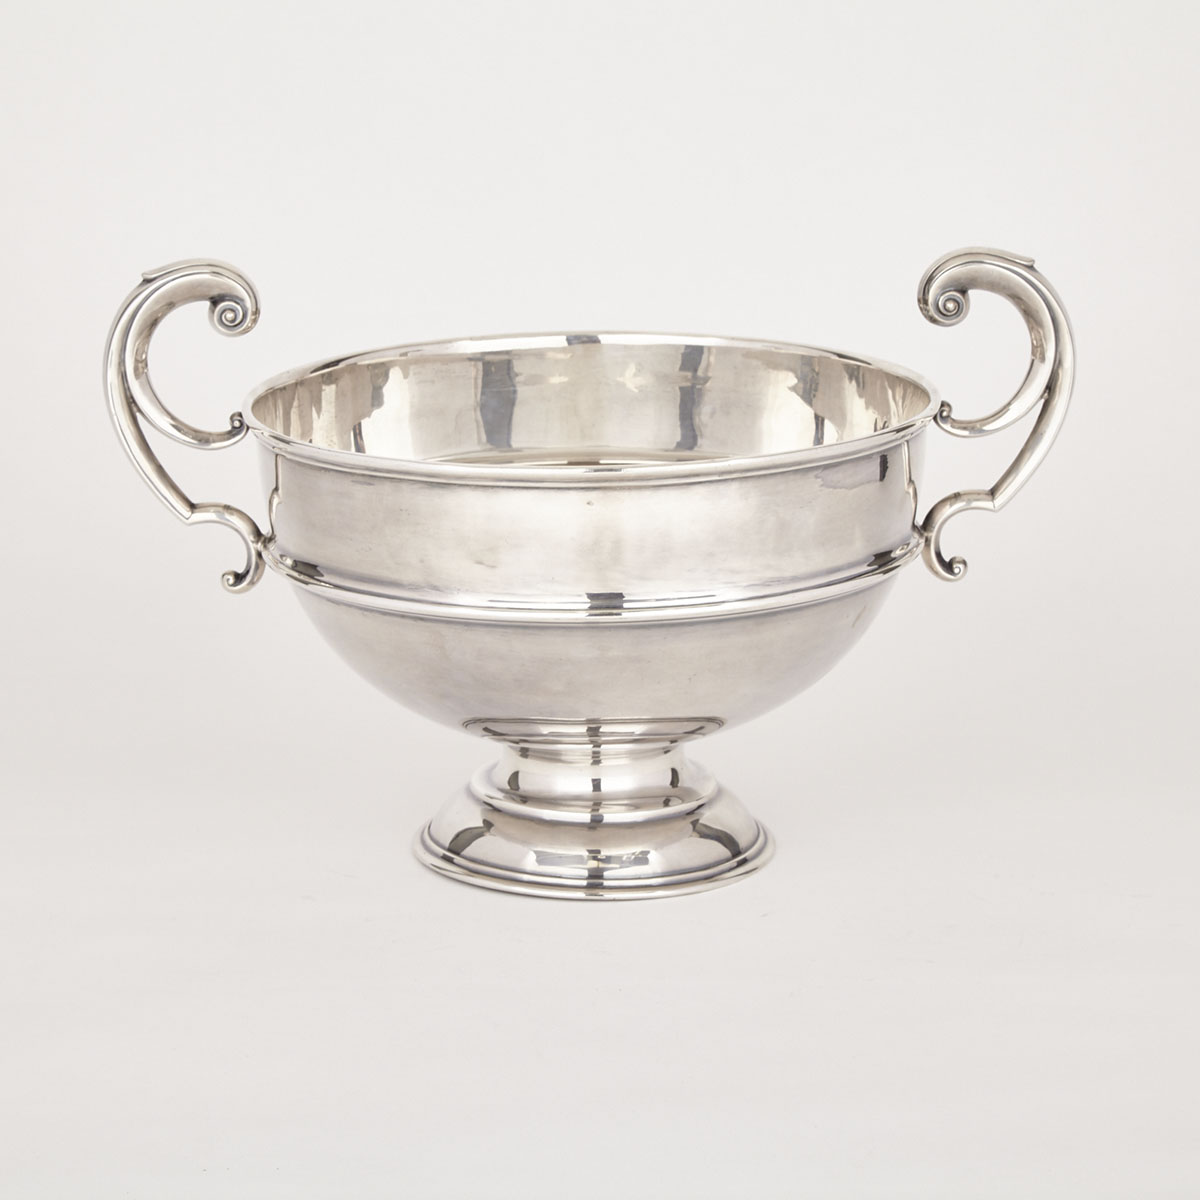 Edwardian Silver Two-Handled Footed Bowl, Charles Boyton III, London, 1903